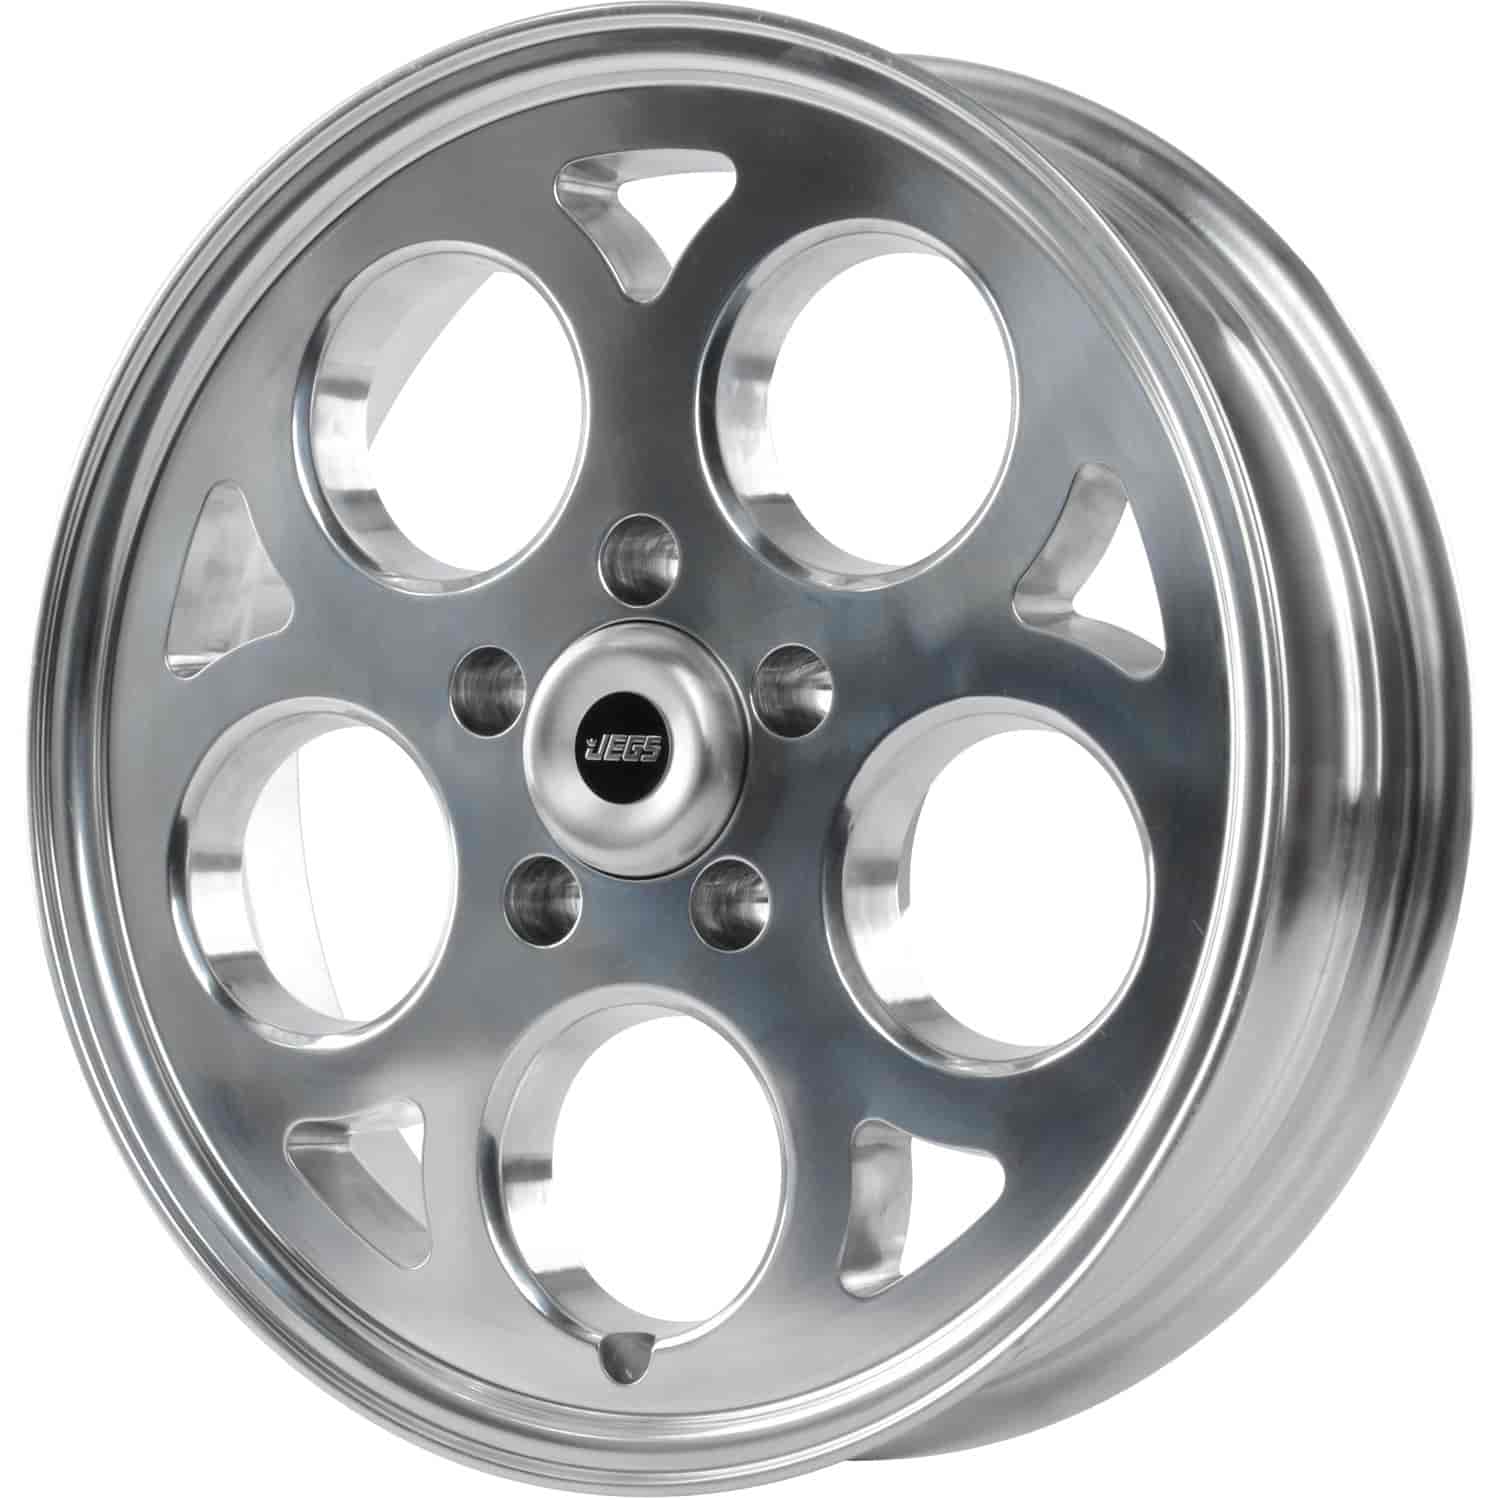 SSR Mag Wheel [Size: 17" x 4.5"] Polished